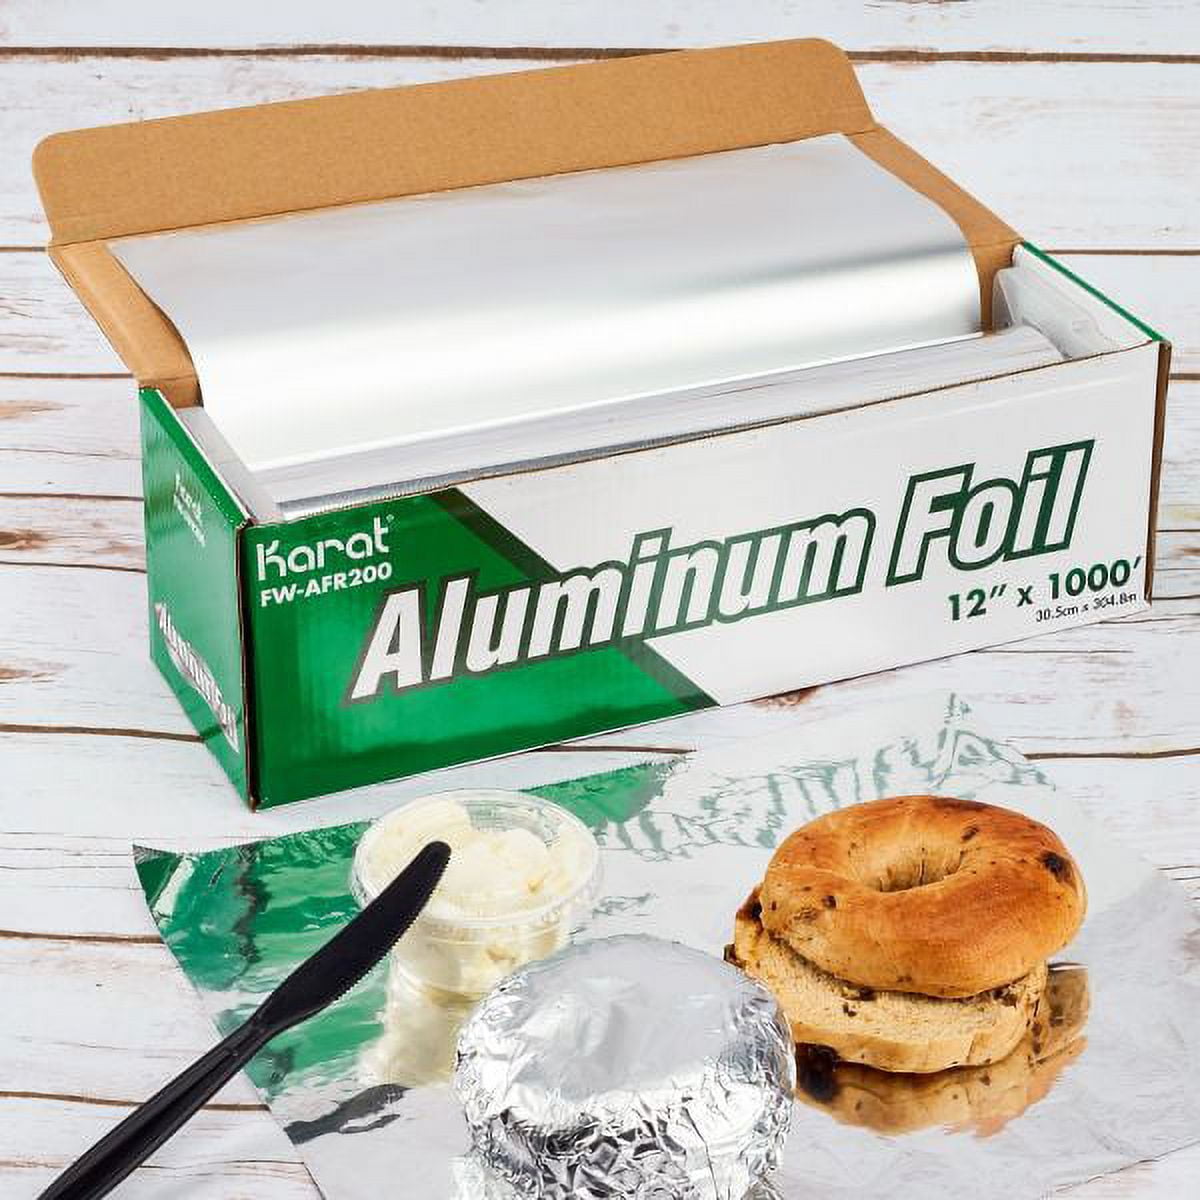 Standard Aluminum Foil Roll, 12 x 1,000 ft